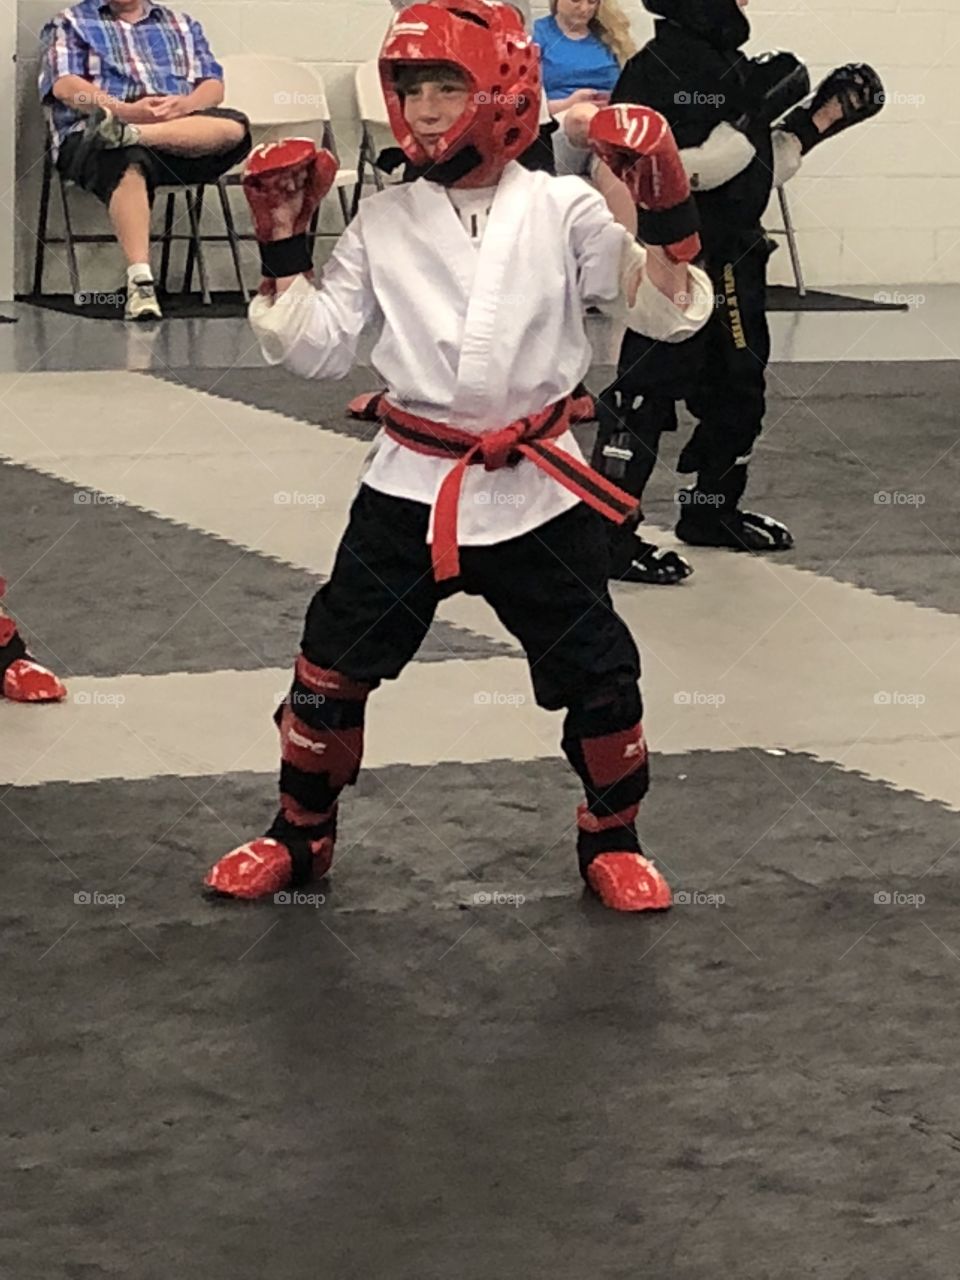 Karate kid sparing